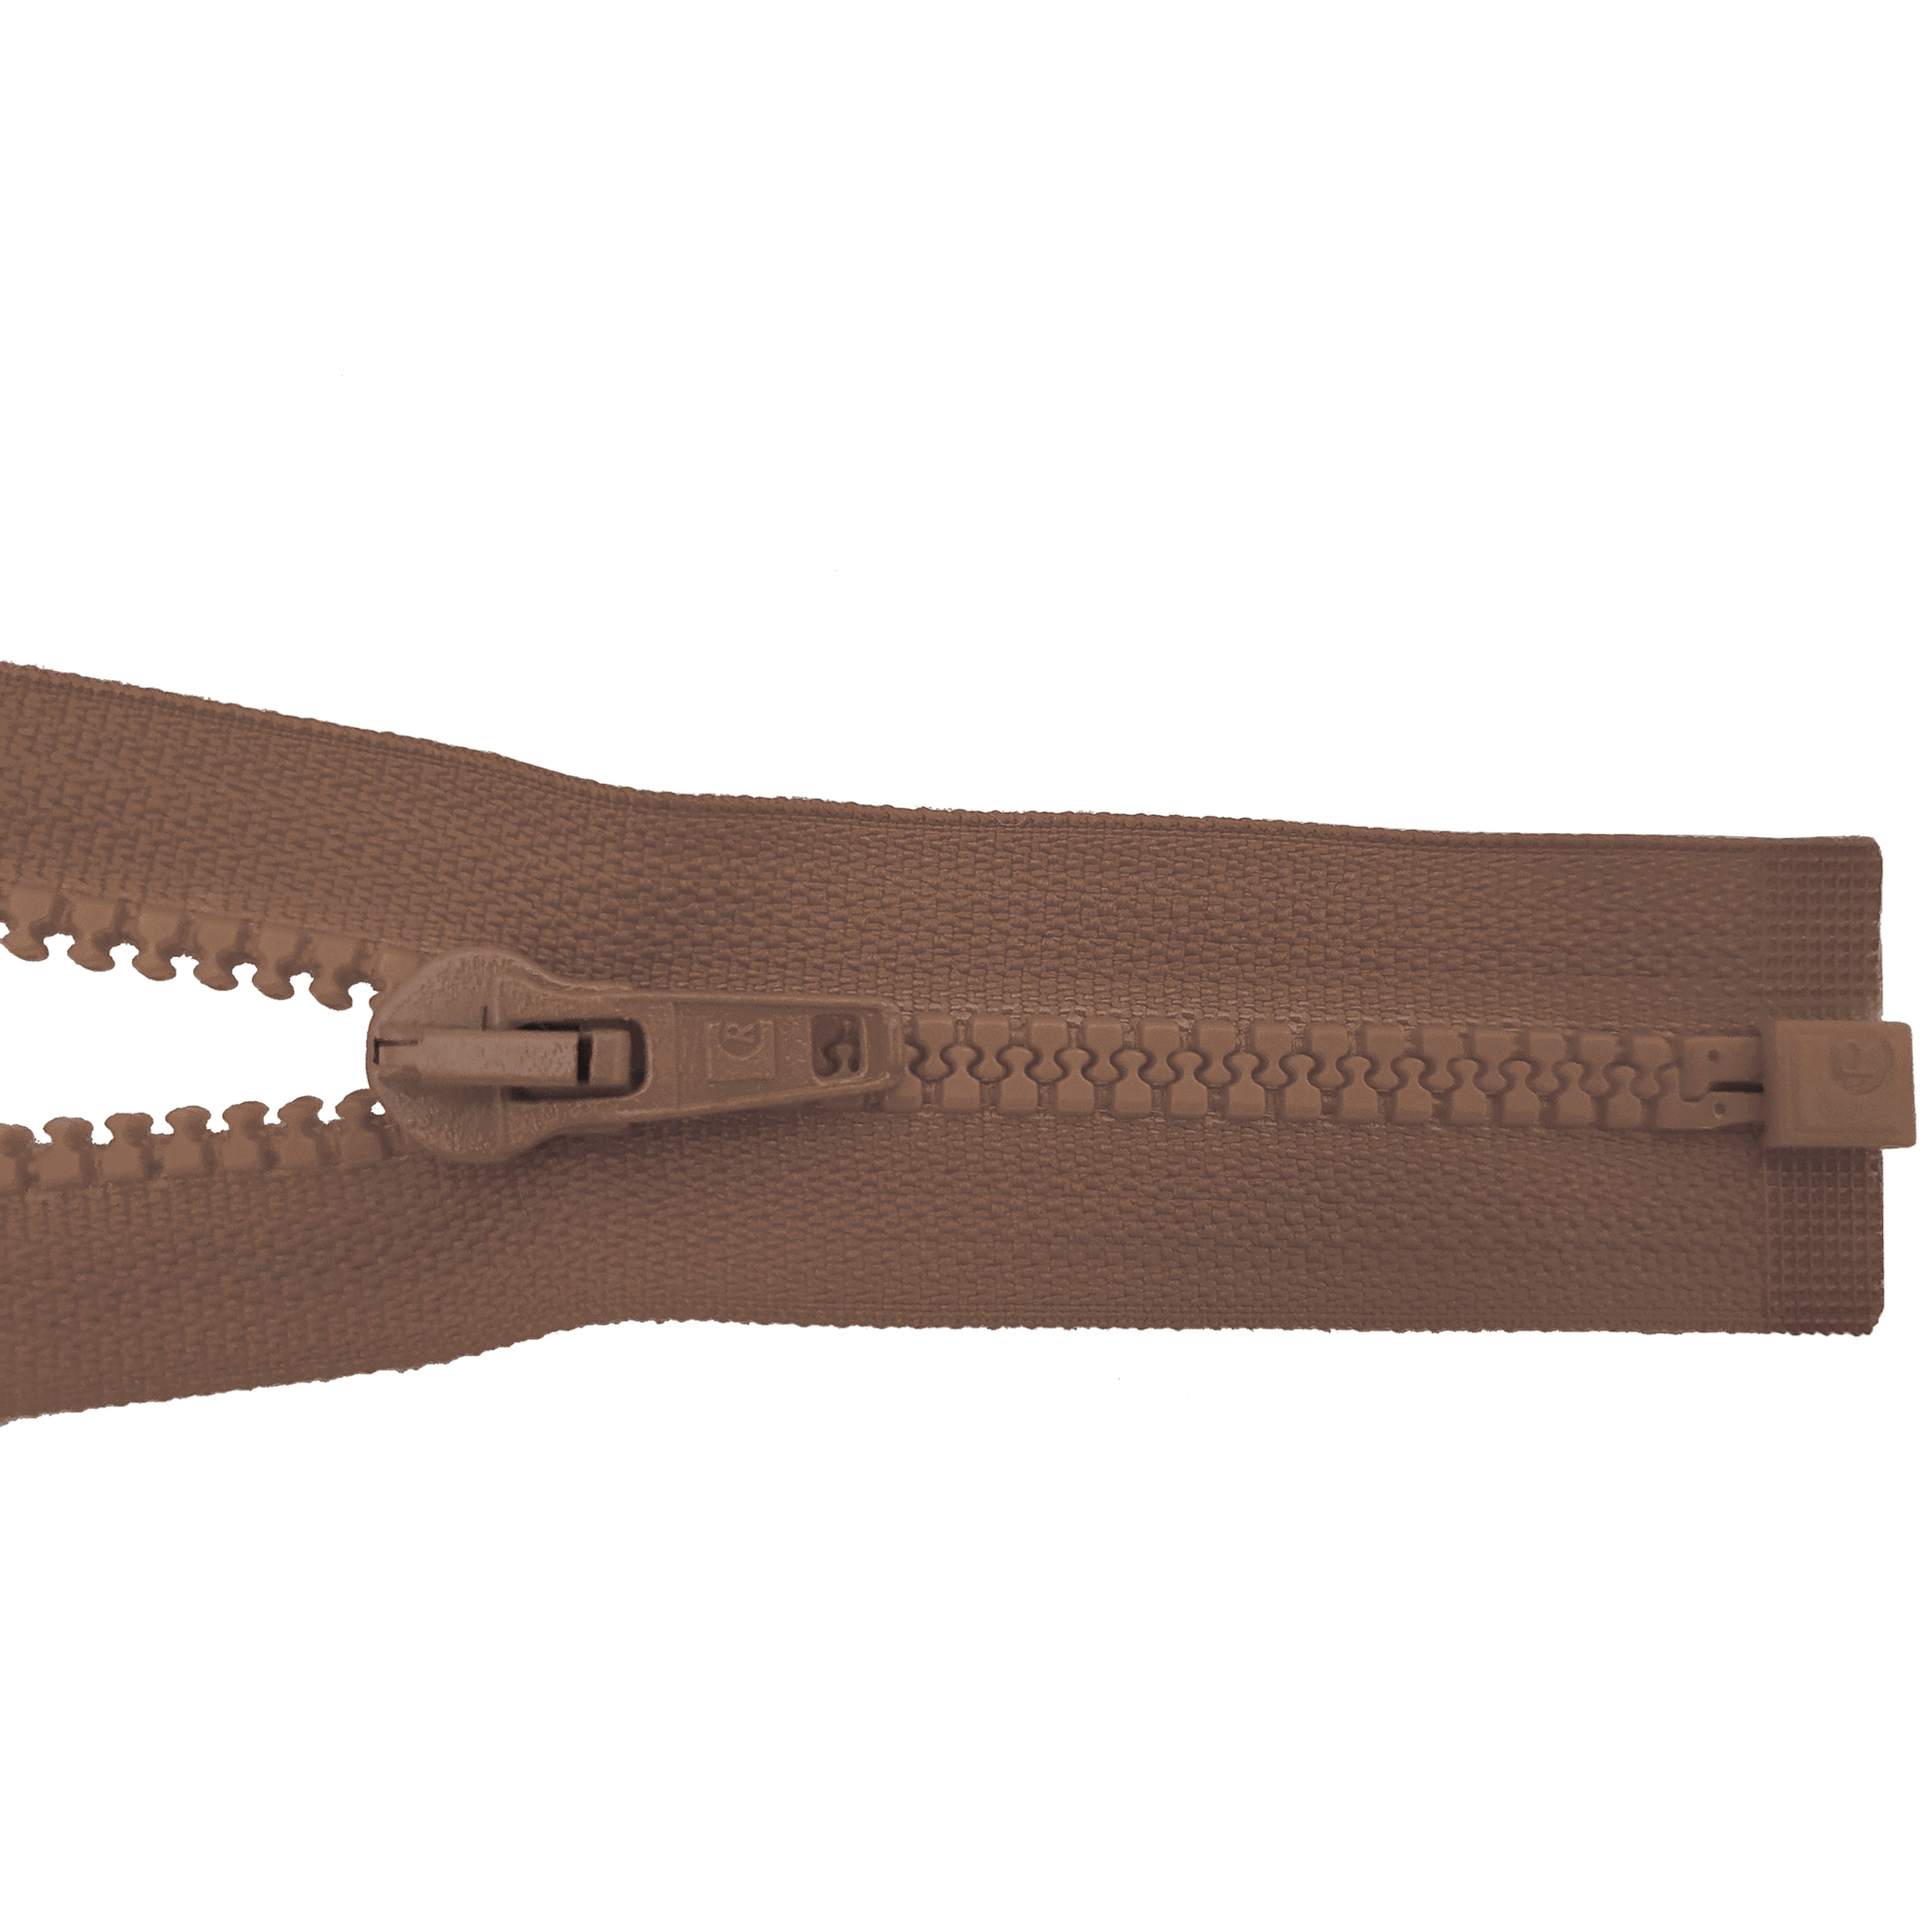 zipper 80cm,divisible, molded plastic, wide, medium brown